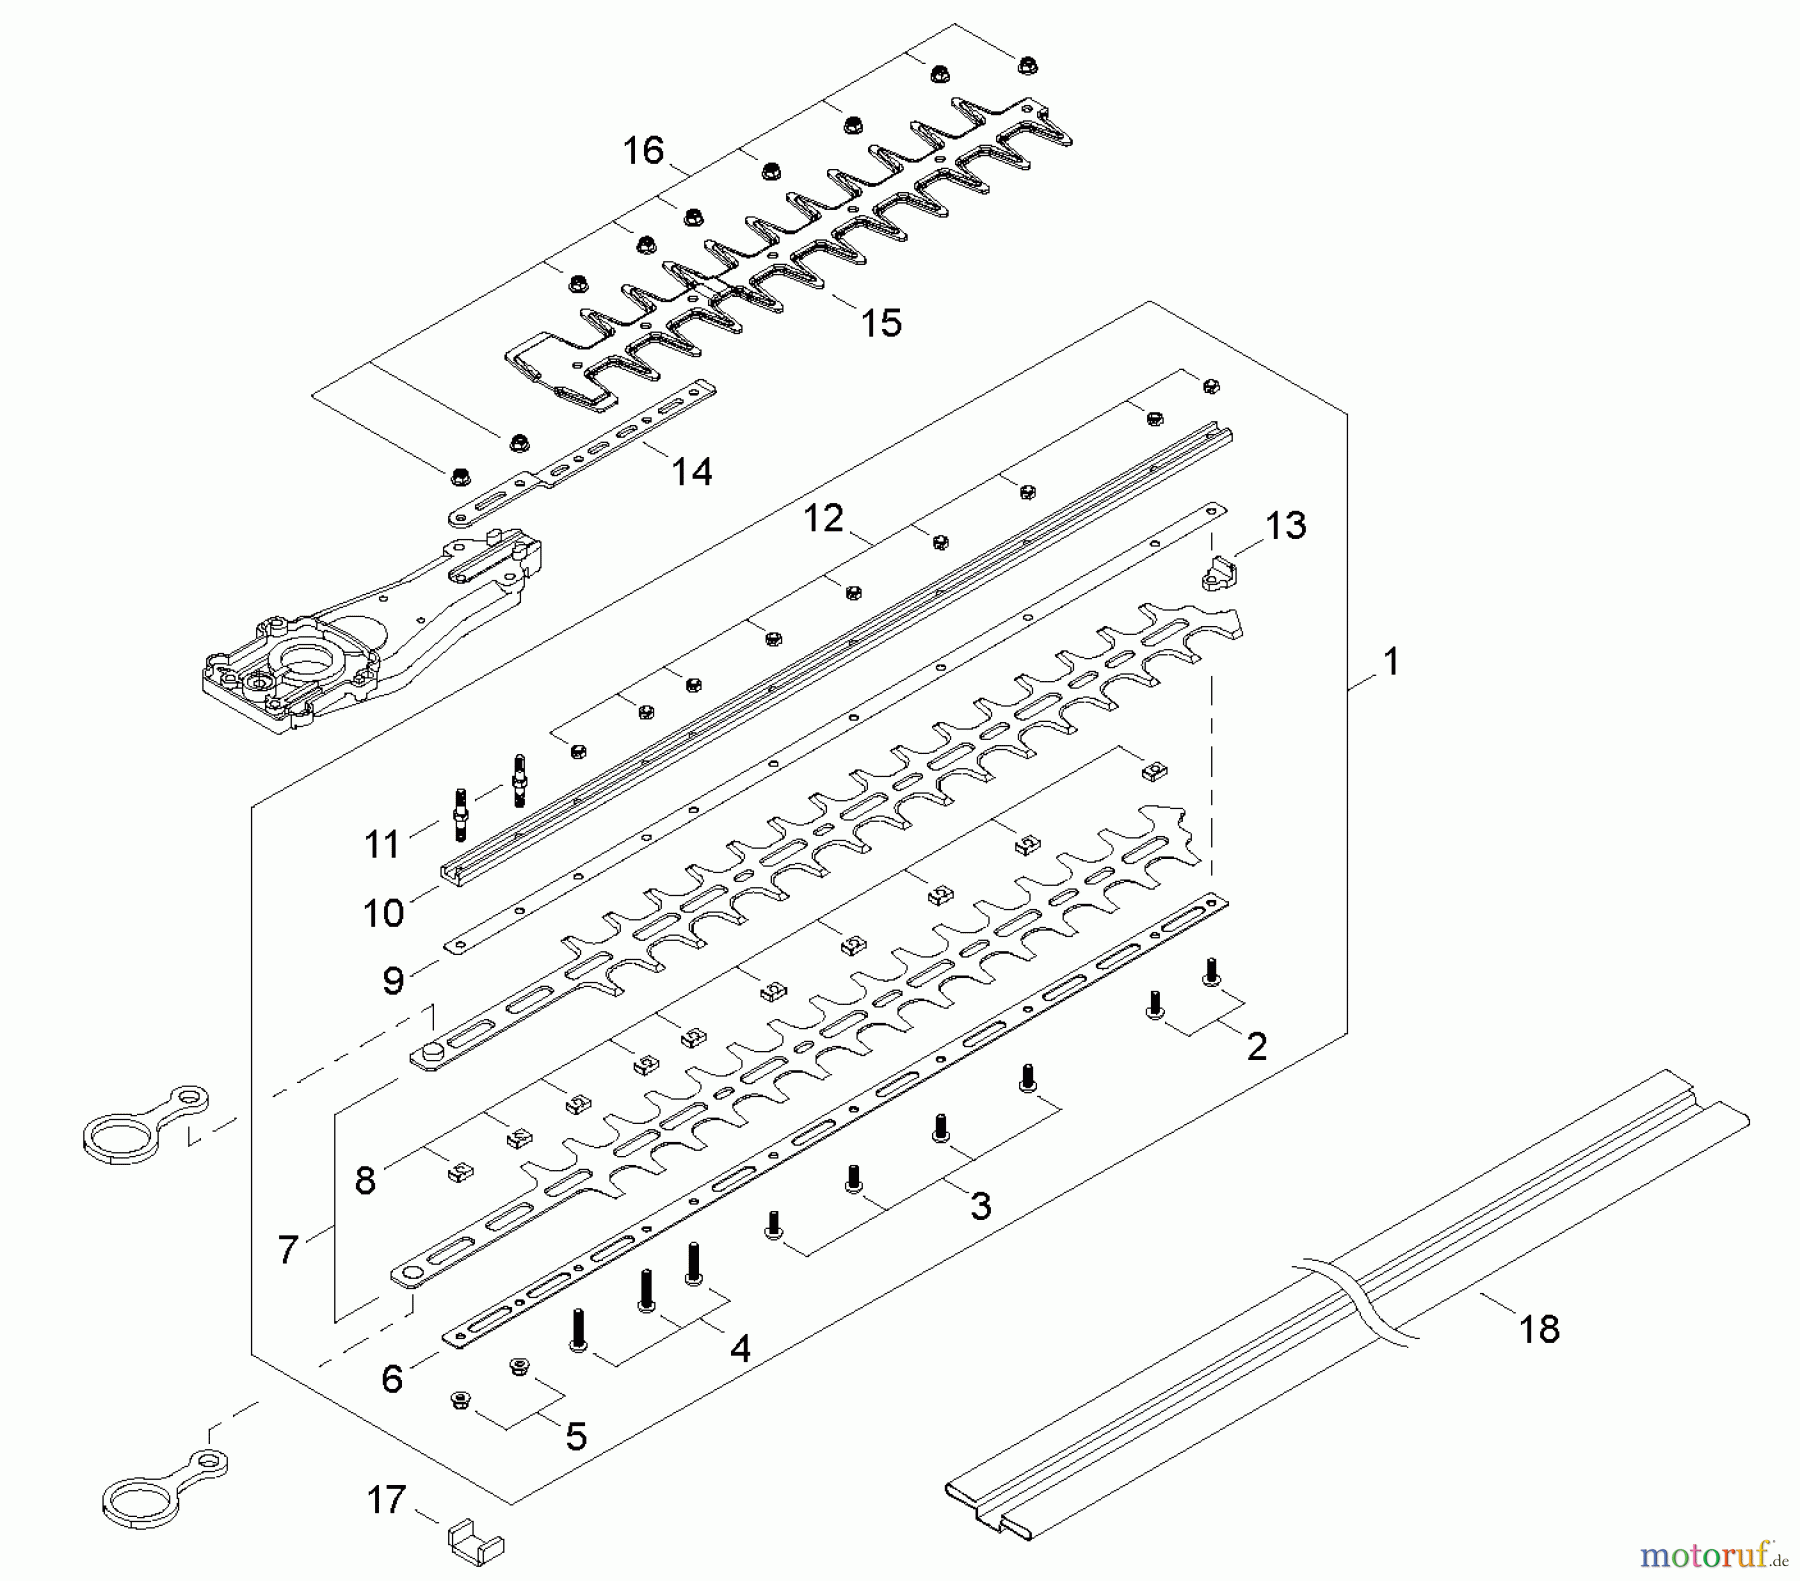  Shindaiwa Heckenscheren DH2510 - Shindaiwa Hedge Trimmer, Dual-Sided 24